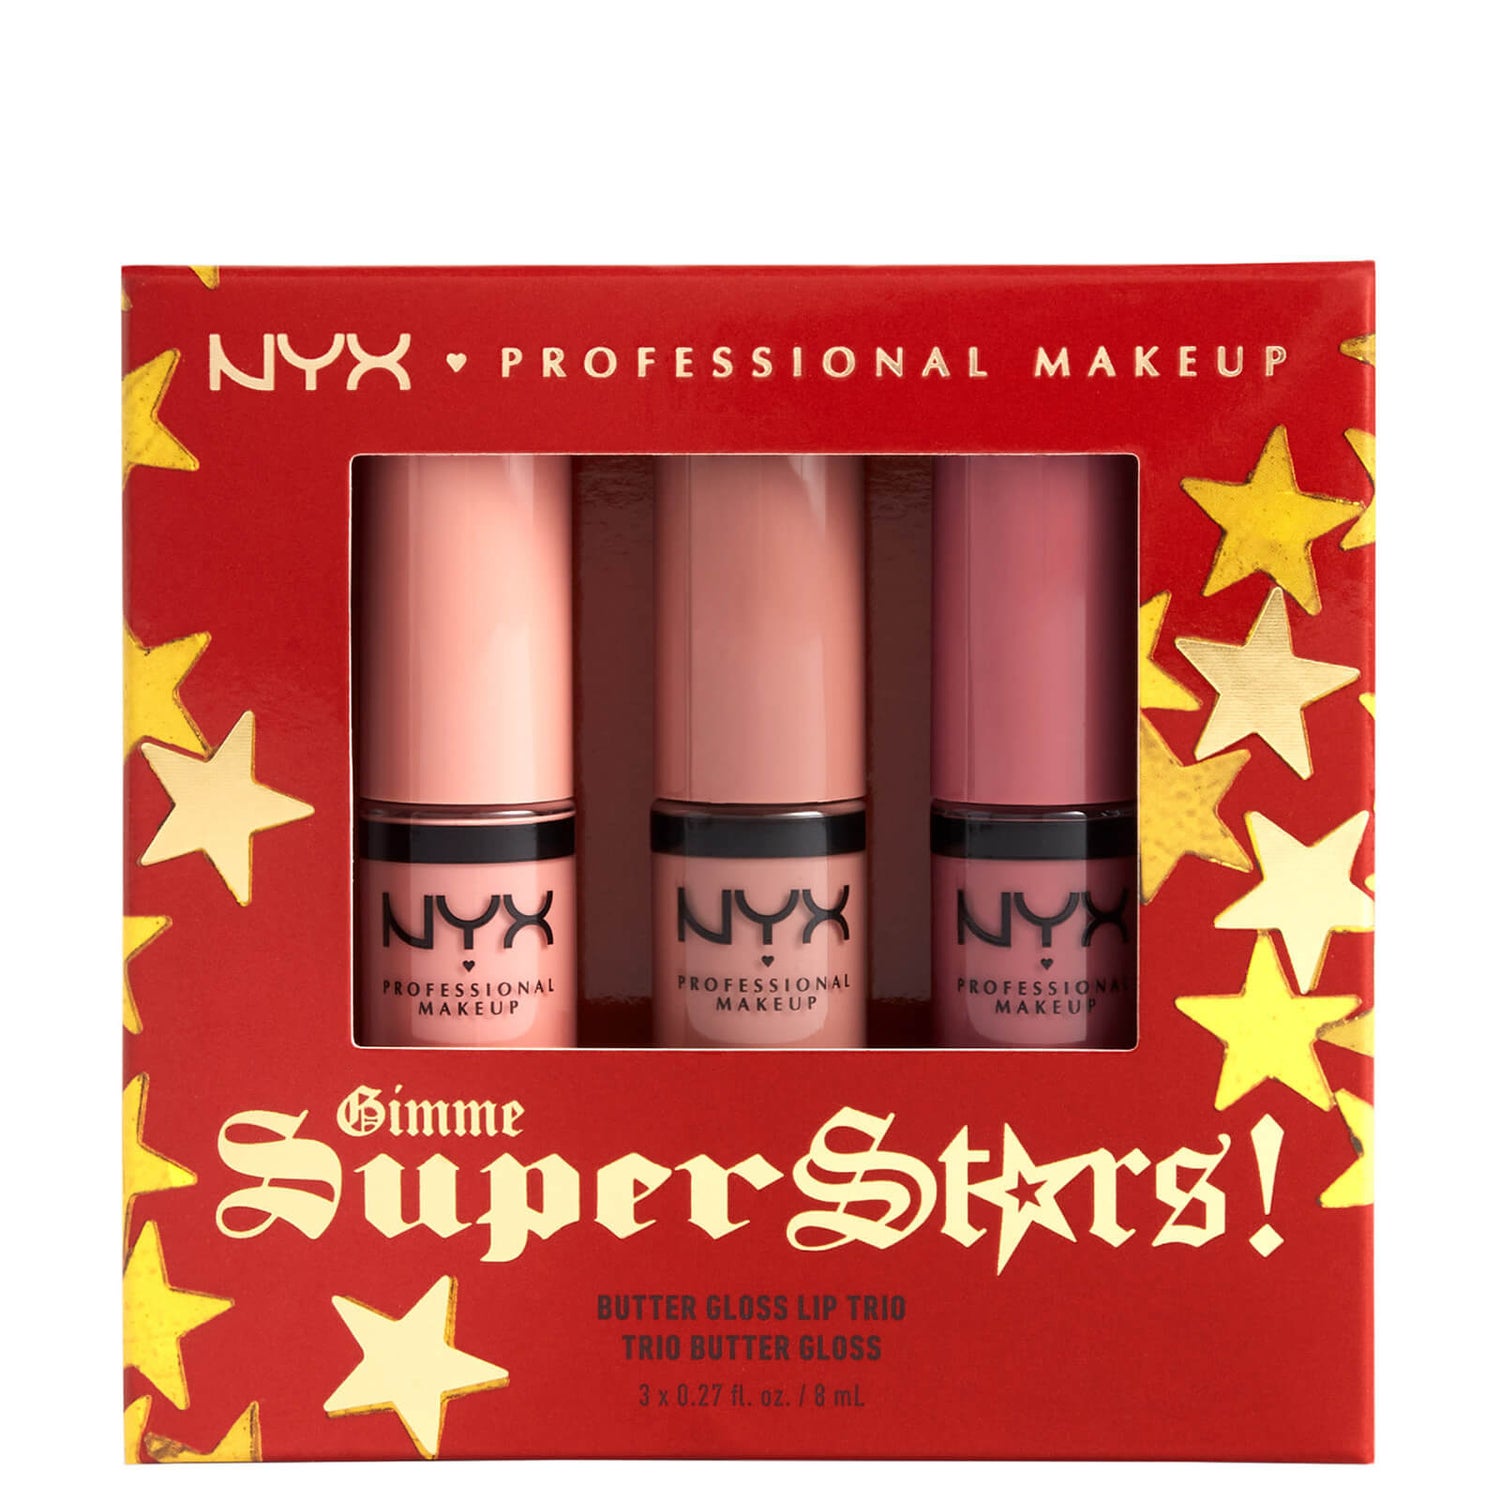 NYX Professional Makeup Gimme Super Stars ! Butter Gloss Lip Trio Light Nude Coffret cadeau